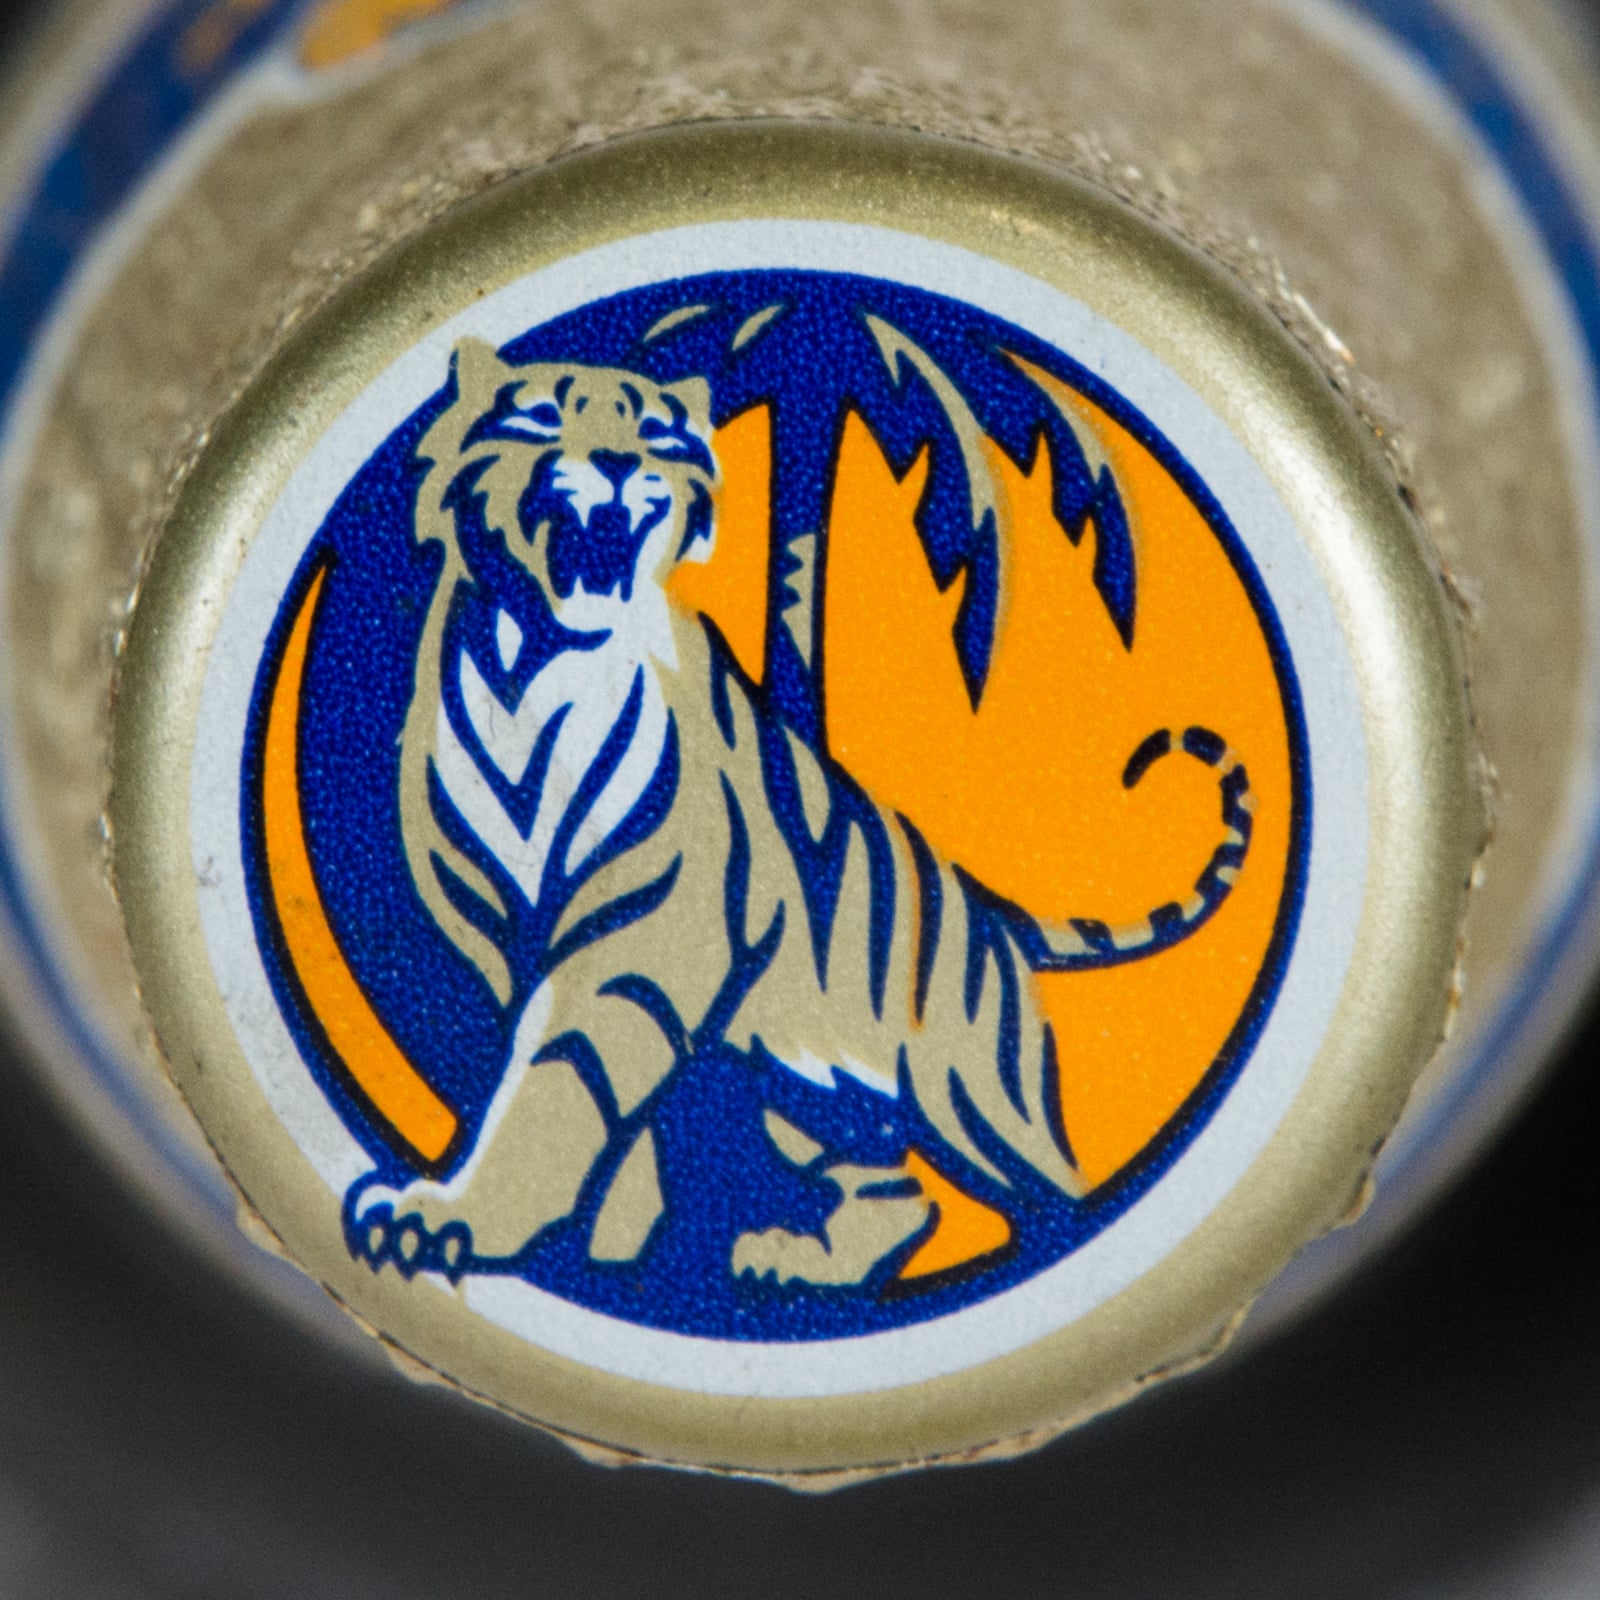 Tiger "World Acclaimed Lager Beer" Bottle, 640 ml